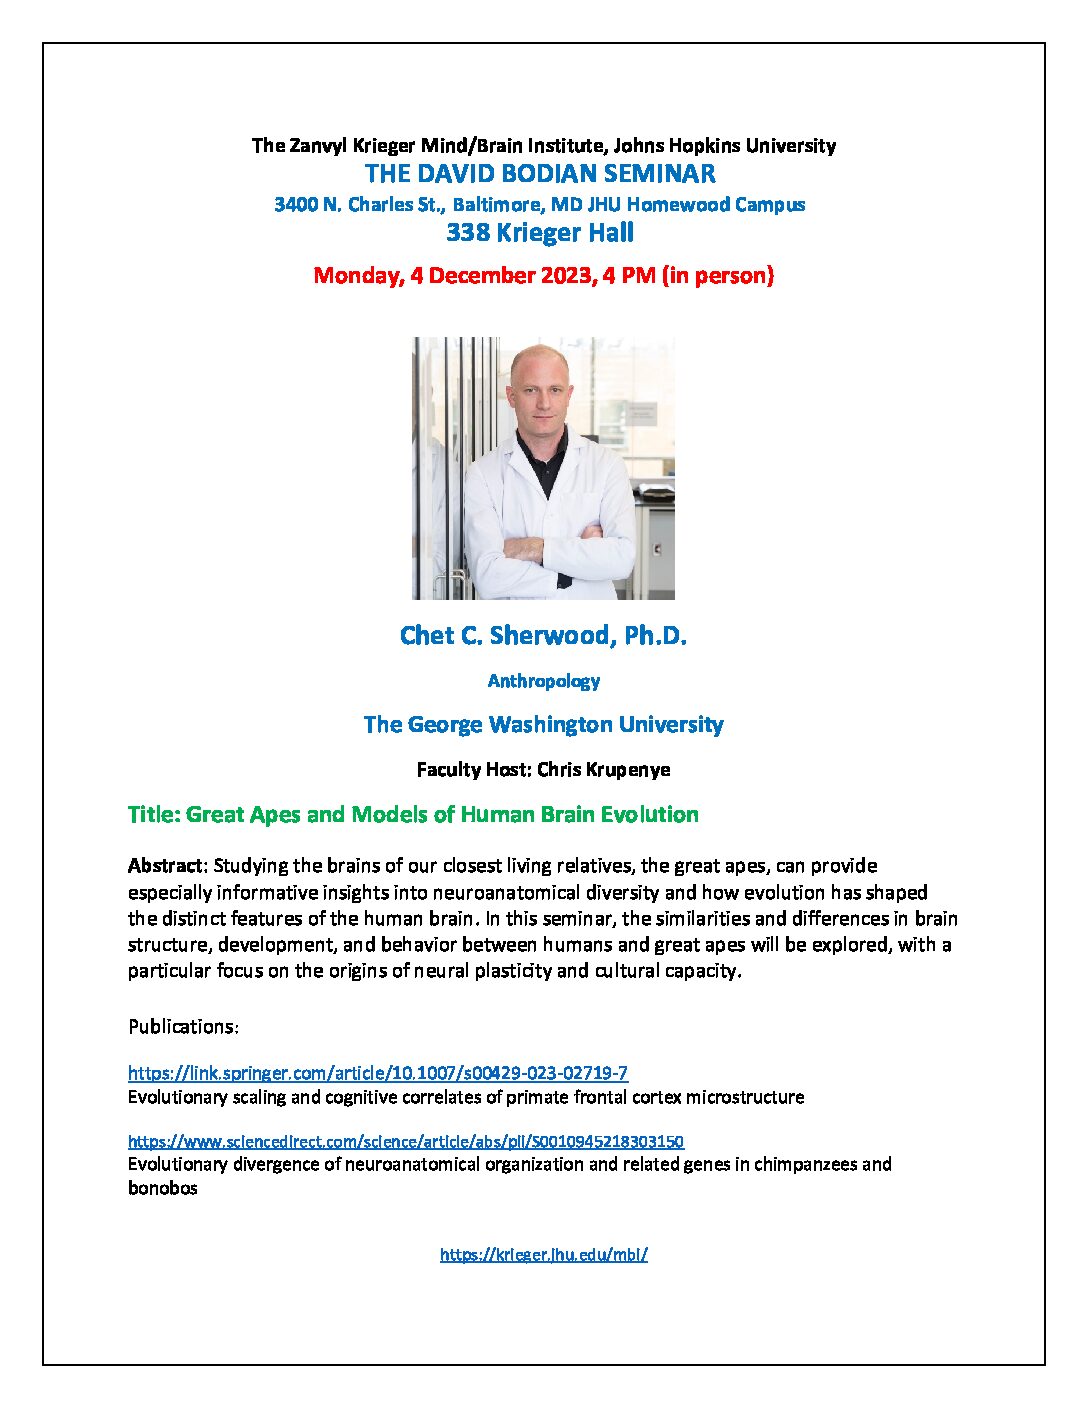 Monday, 12/4/23: Dr. Chet Sherwood, Bodian Seminar